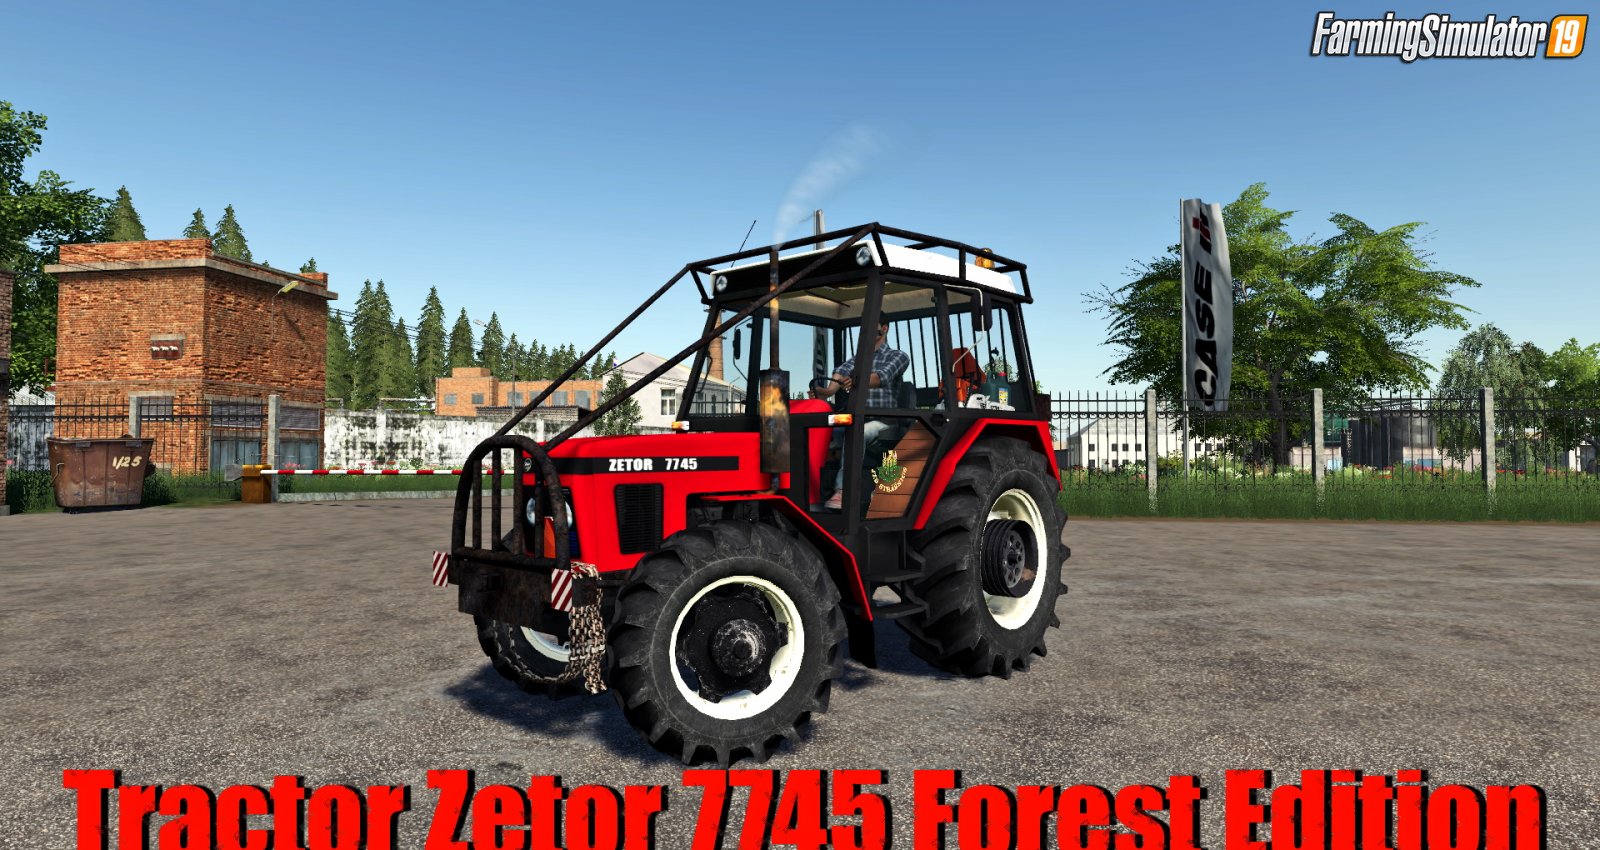 Tractor Zetor 7745 Forest Edition v1.0 for FS19